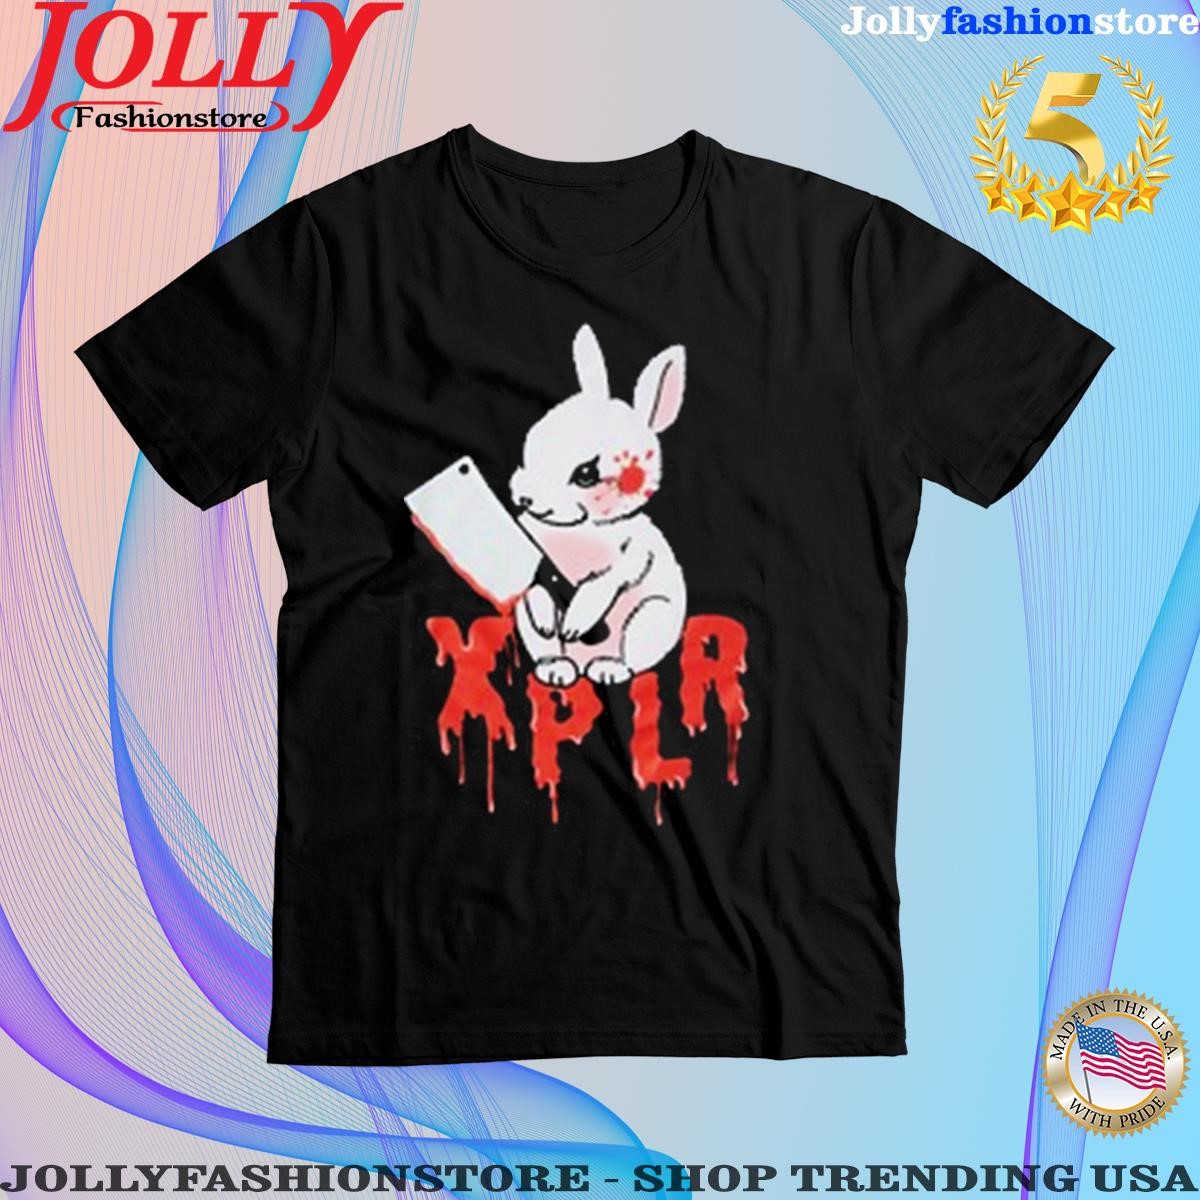 Trending xPLR Rabbit T Shirt